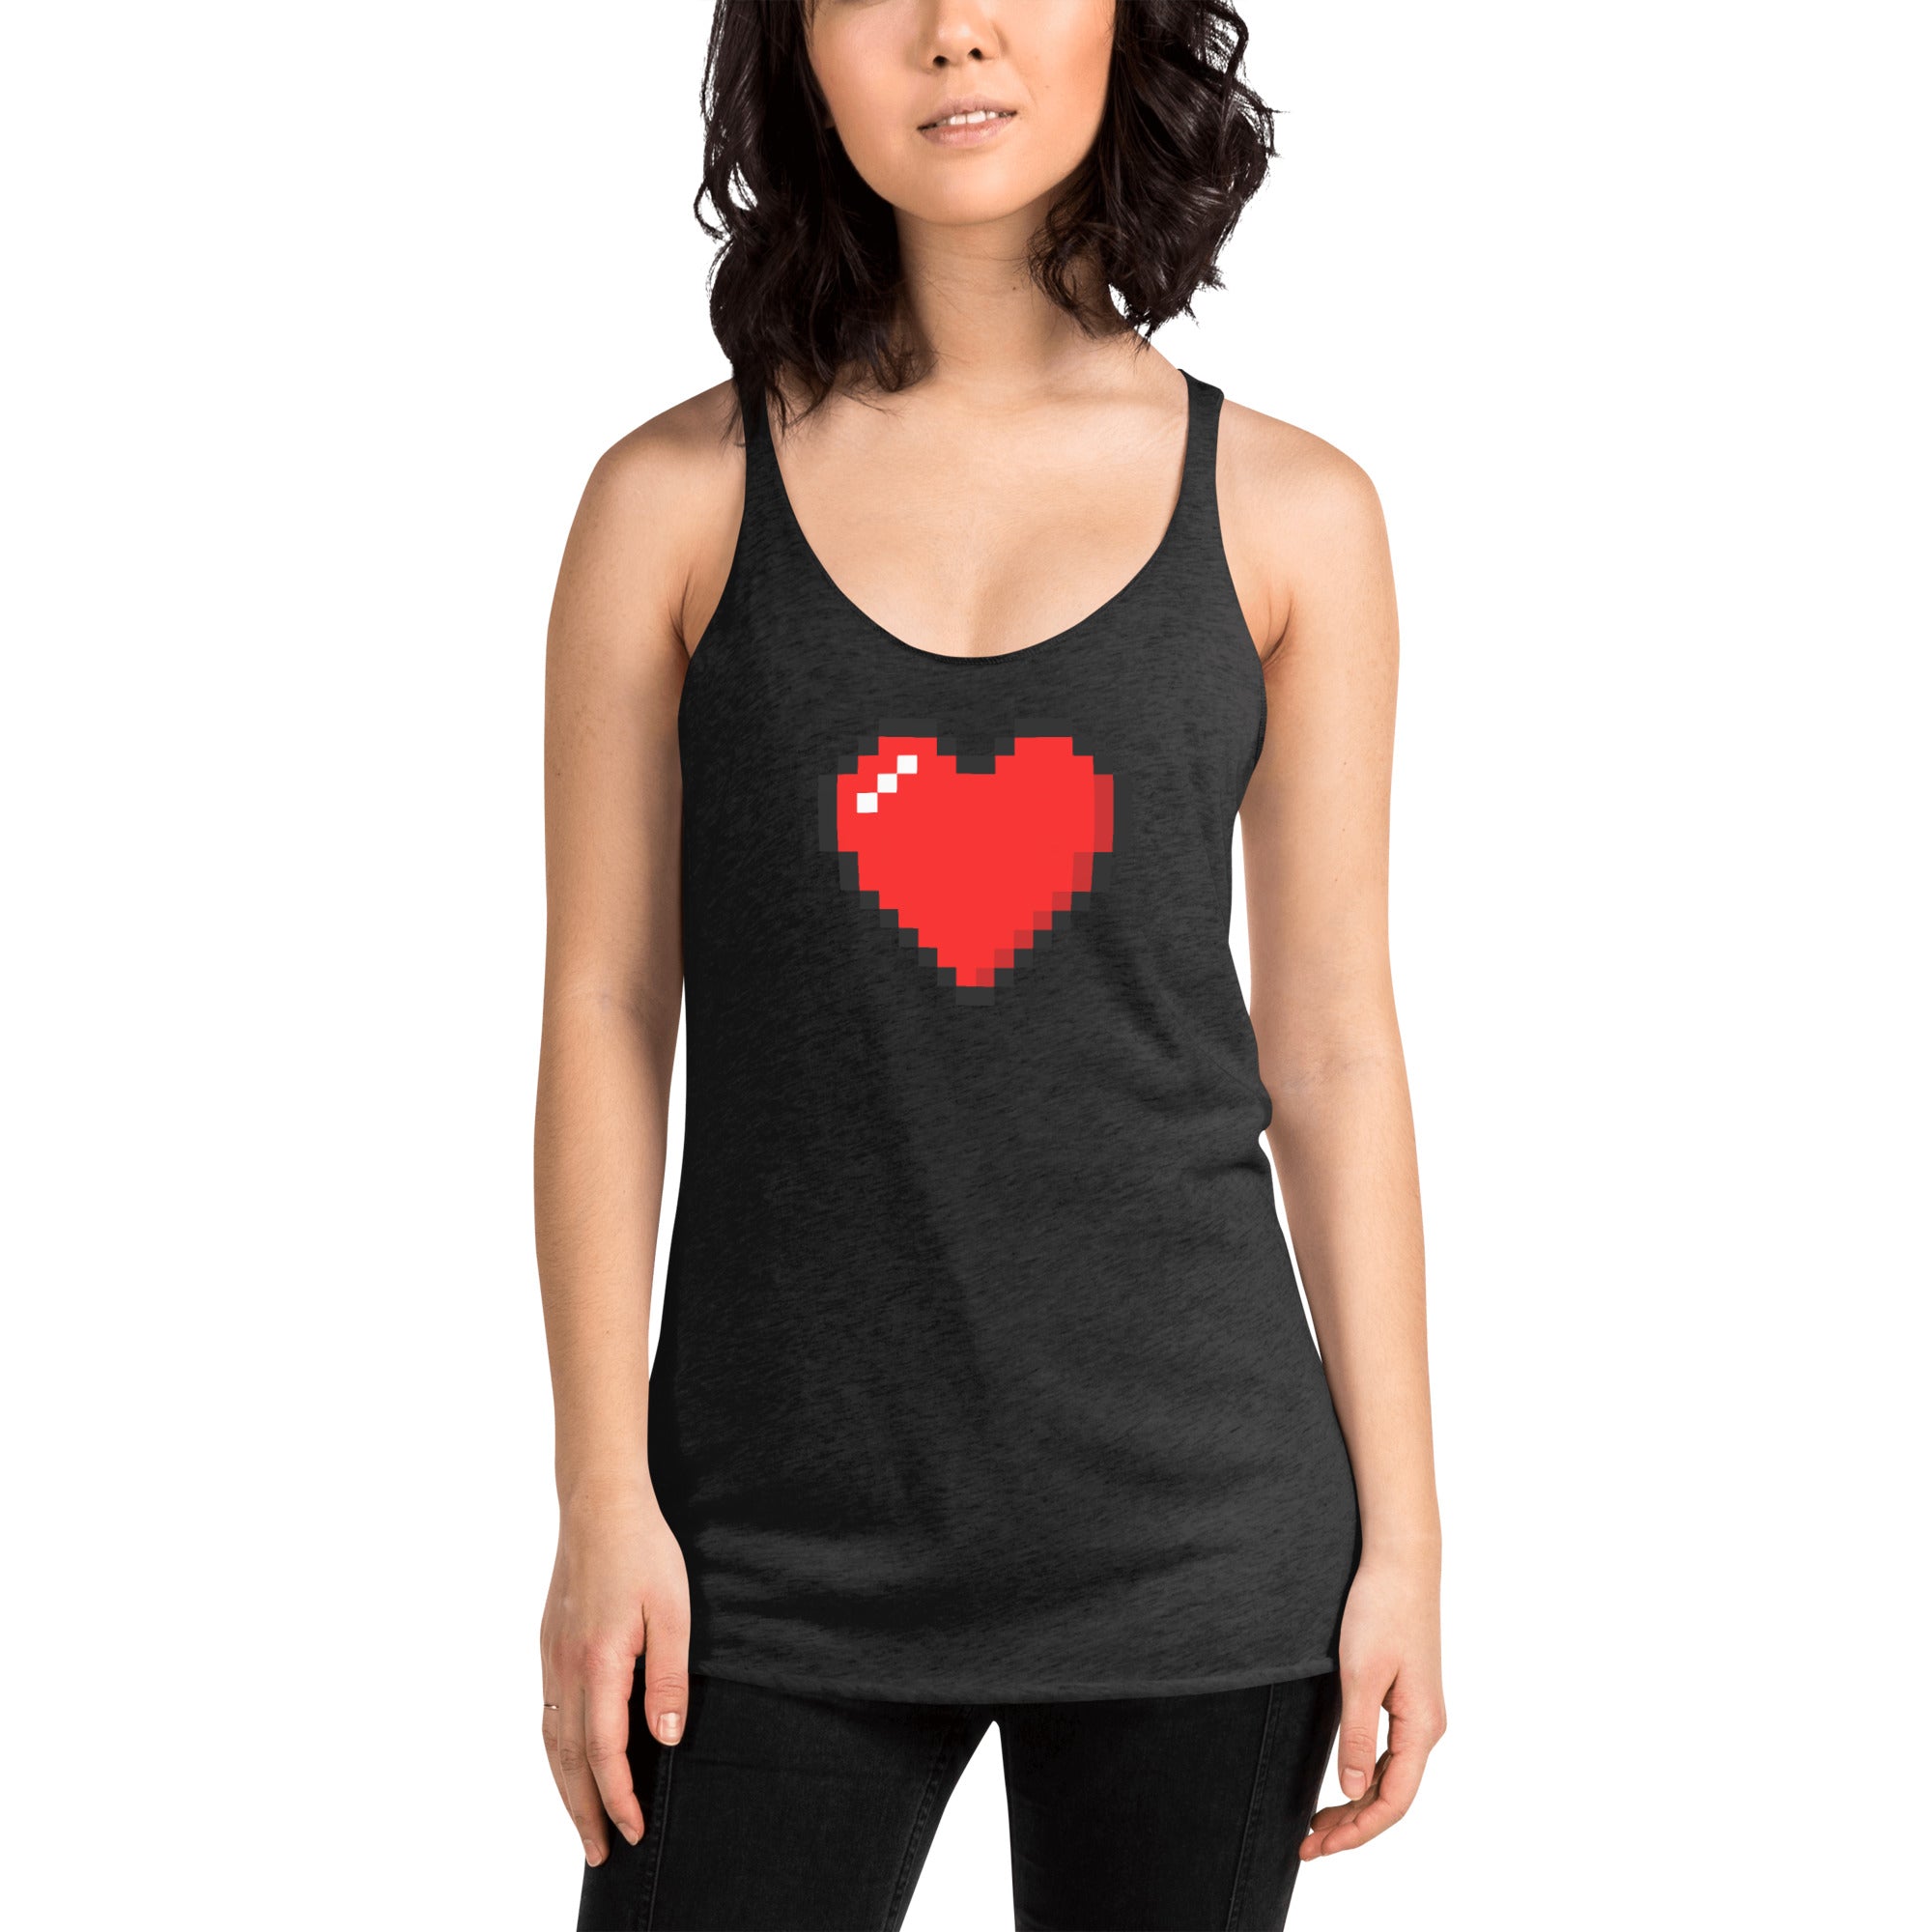 Retro 8 Bit Video Game Pixelated Heart Women's Racerback Tank Top Shirt